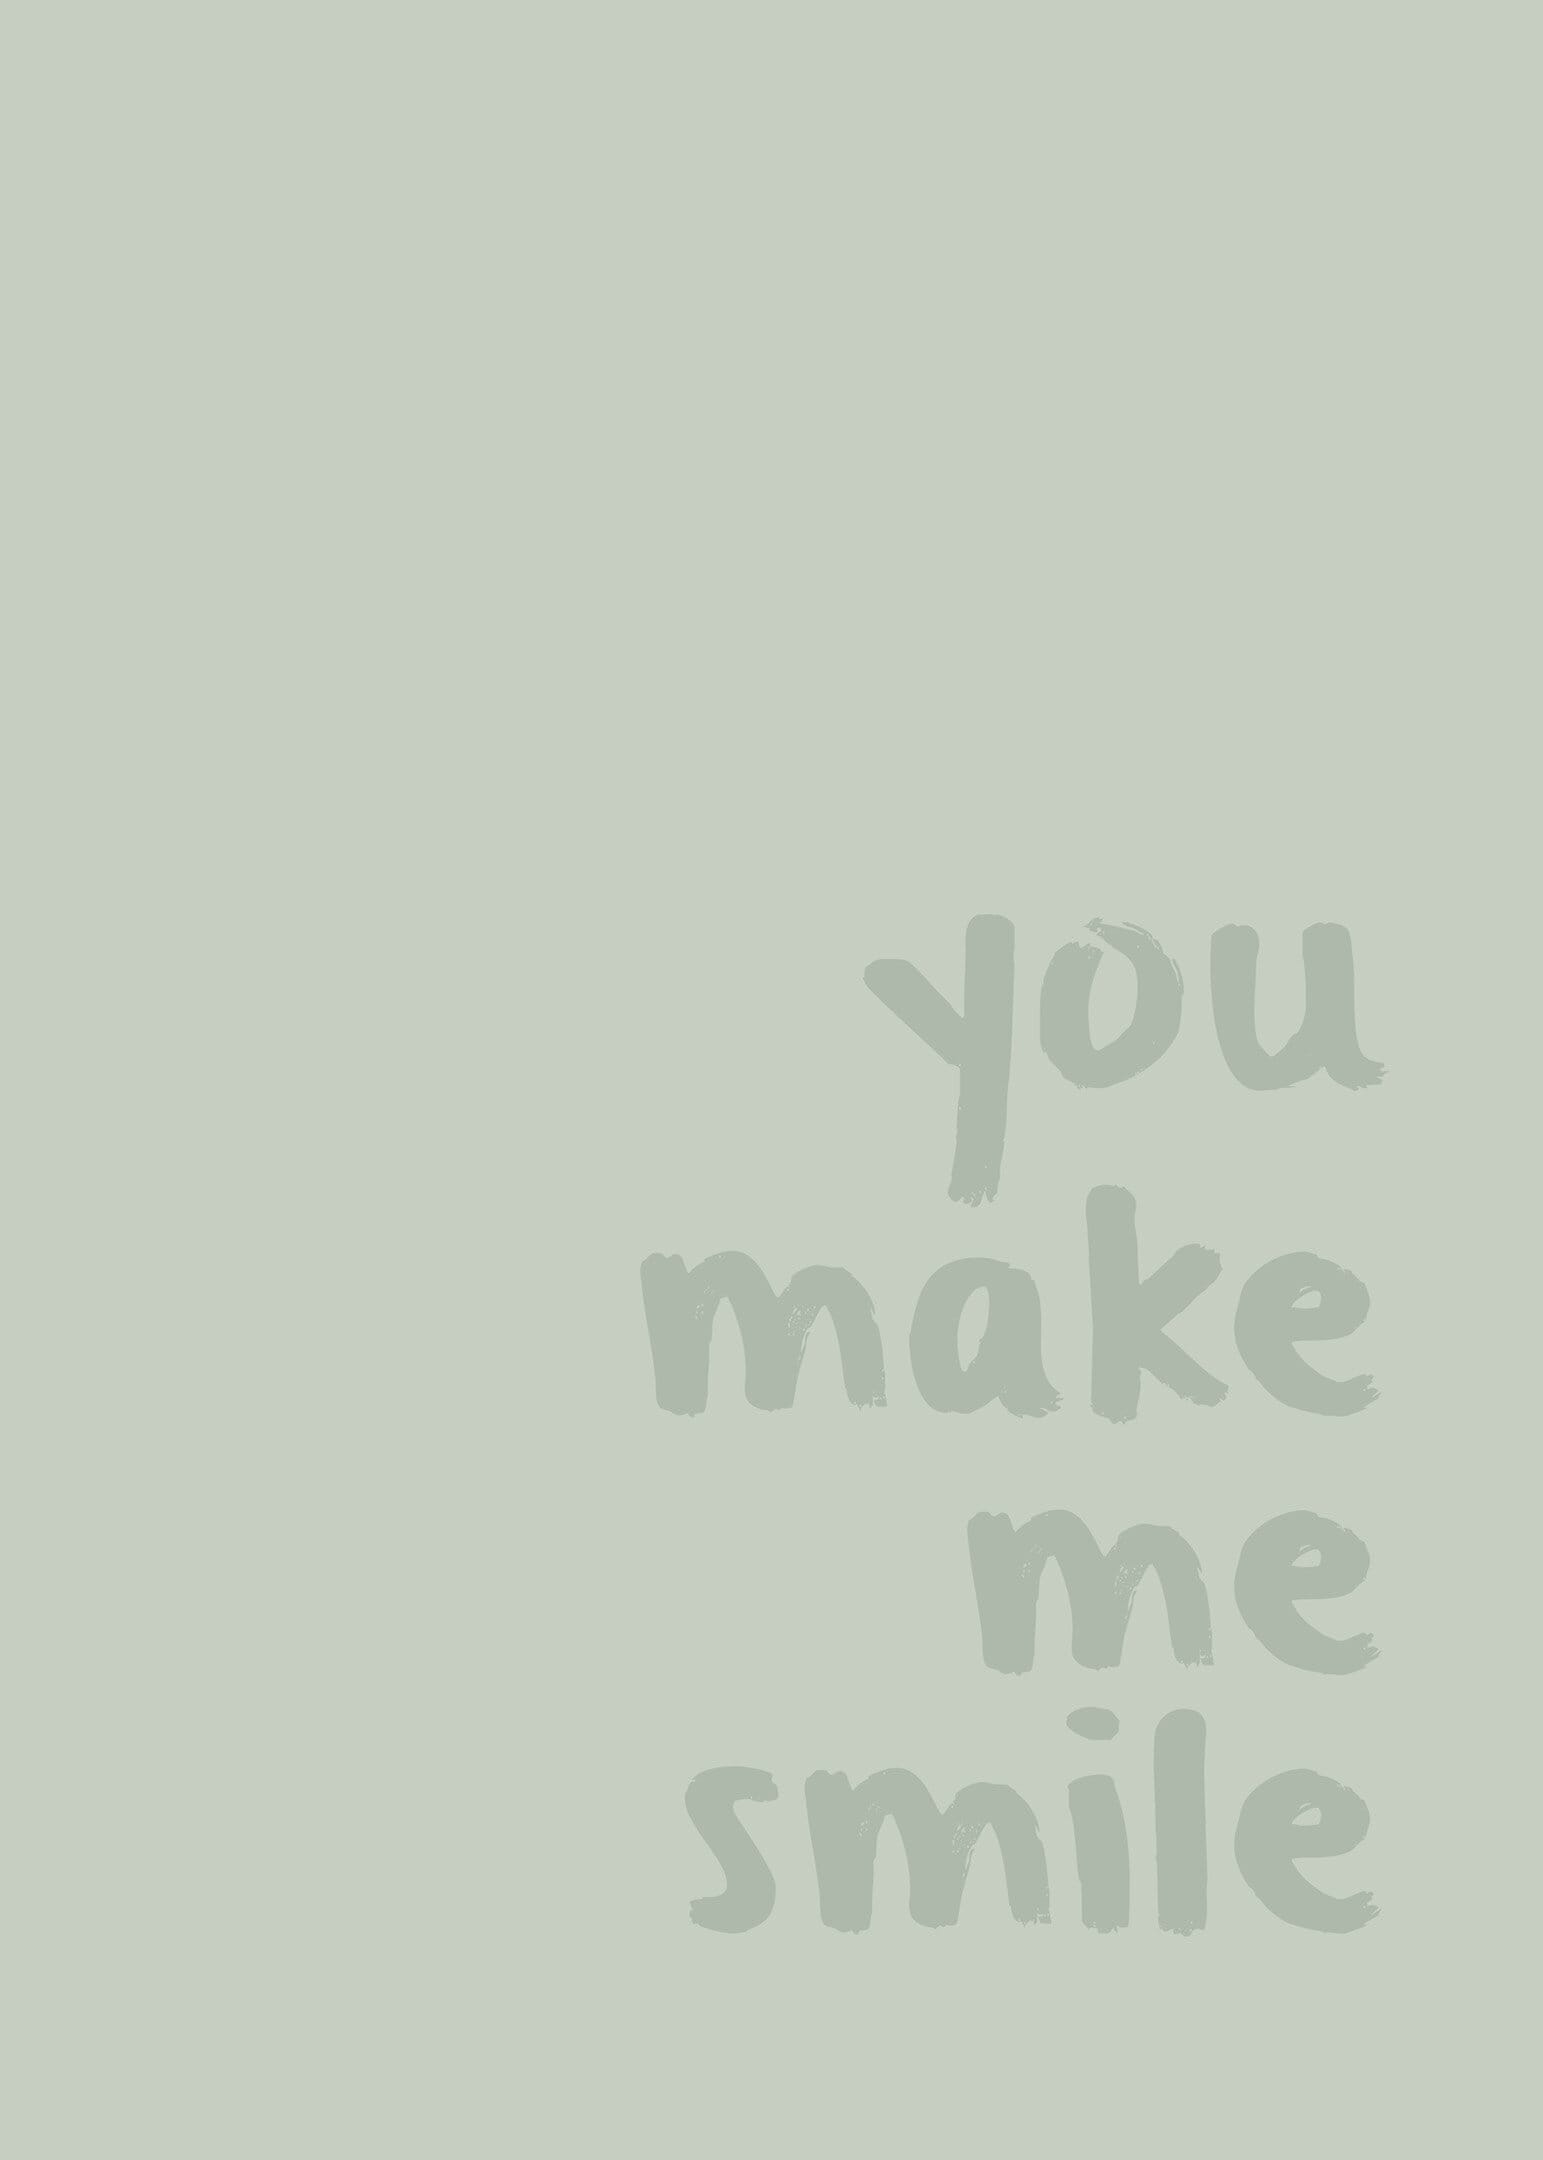 You make me smile green poster